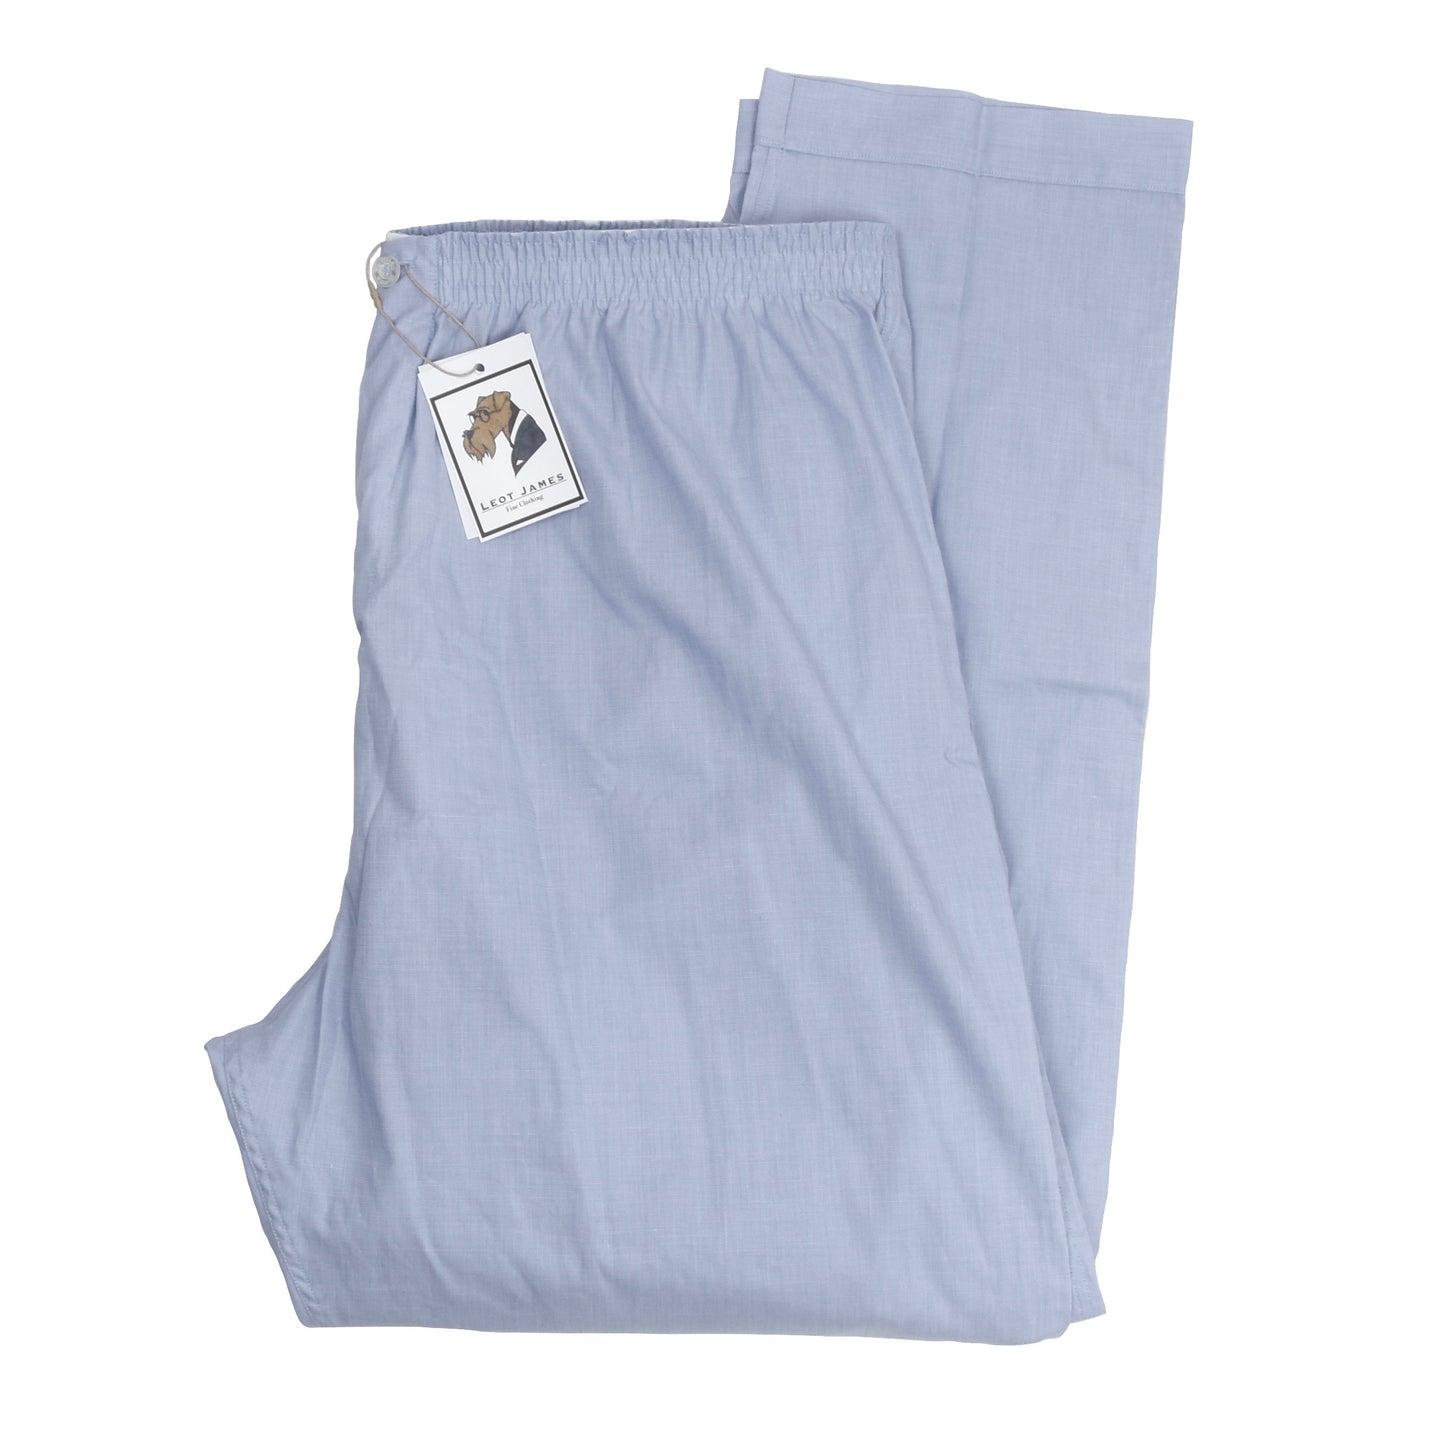 Novila Cotton Pyjama Panys Größe 60 - Hellblau